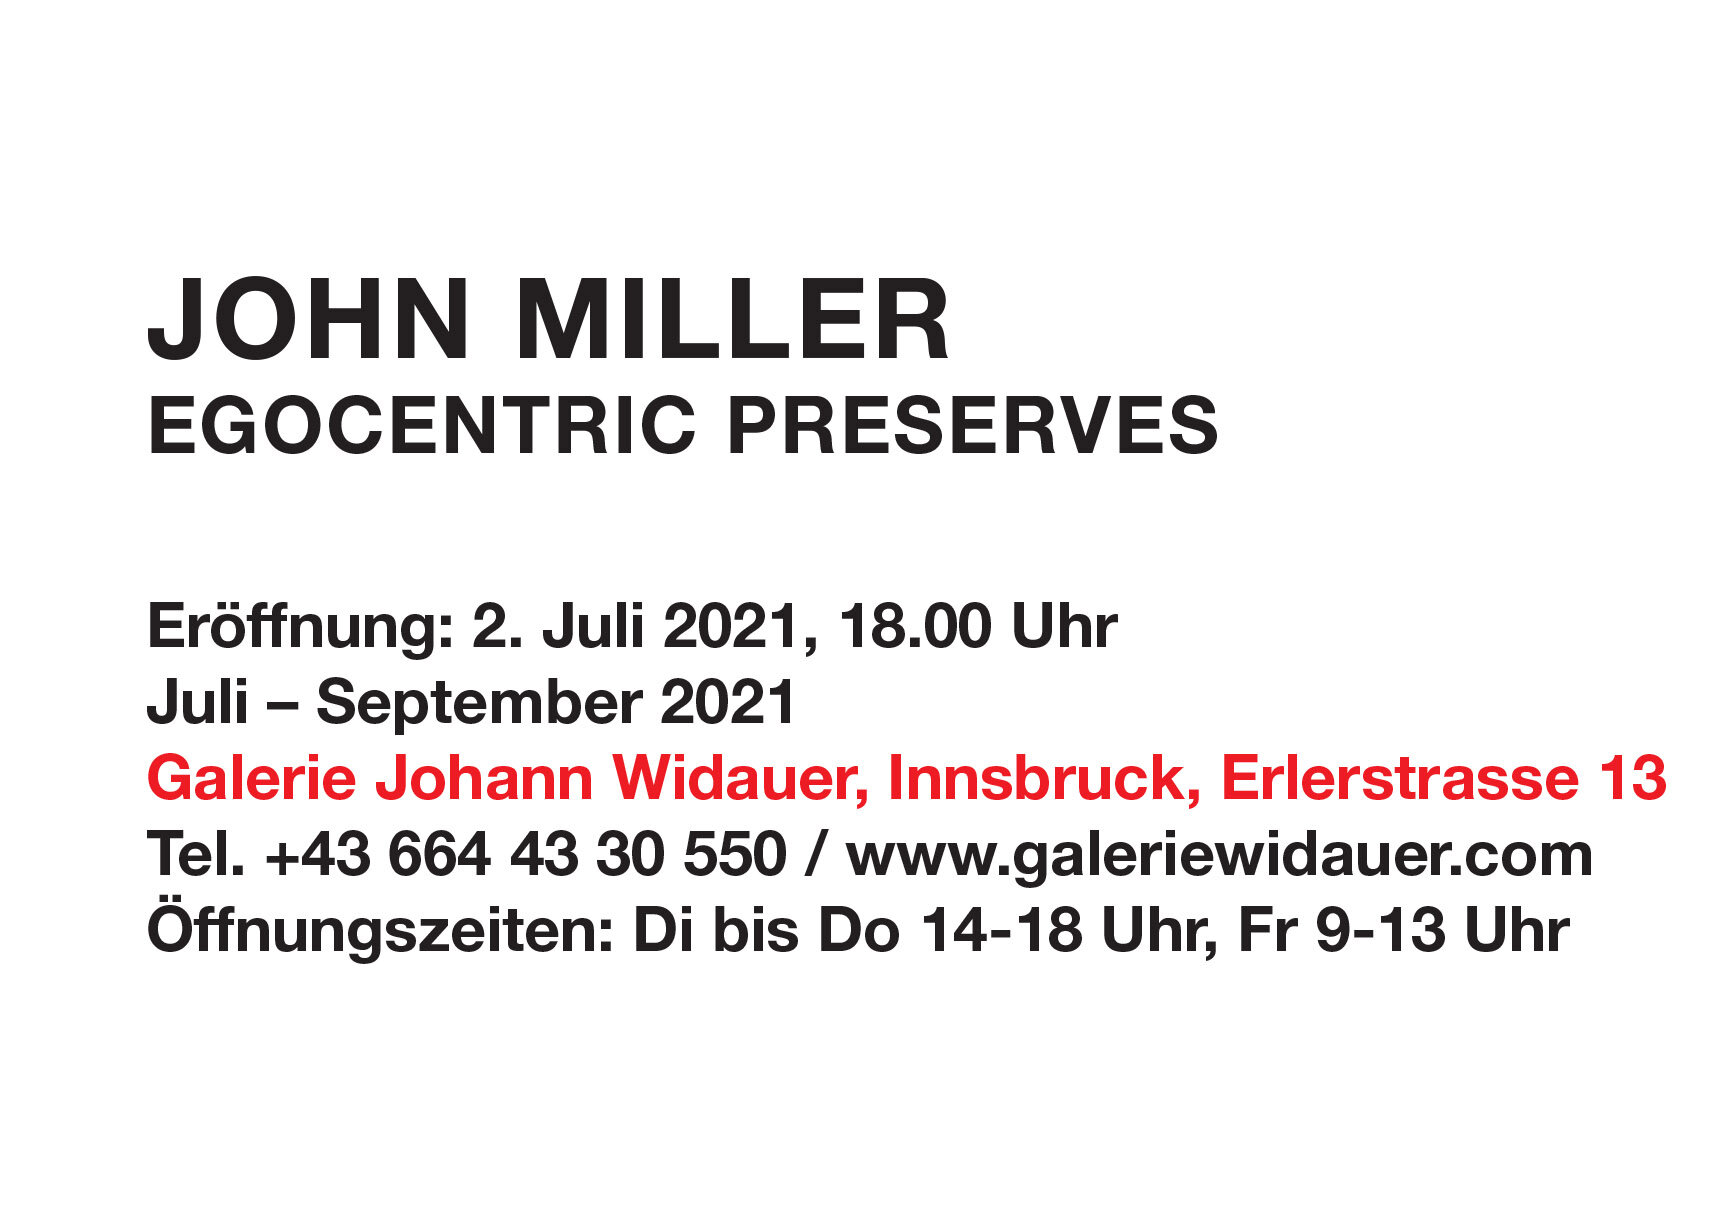 john-miller-exhibition-2021-galerie-johann-widauer-egocentric-preserves.jpg